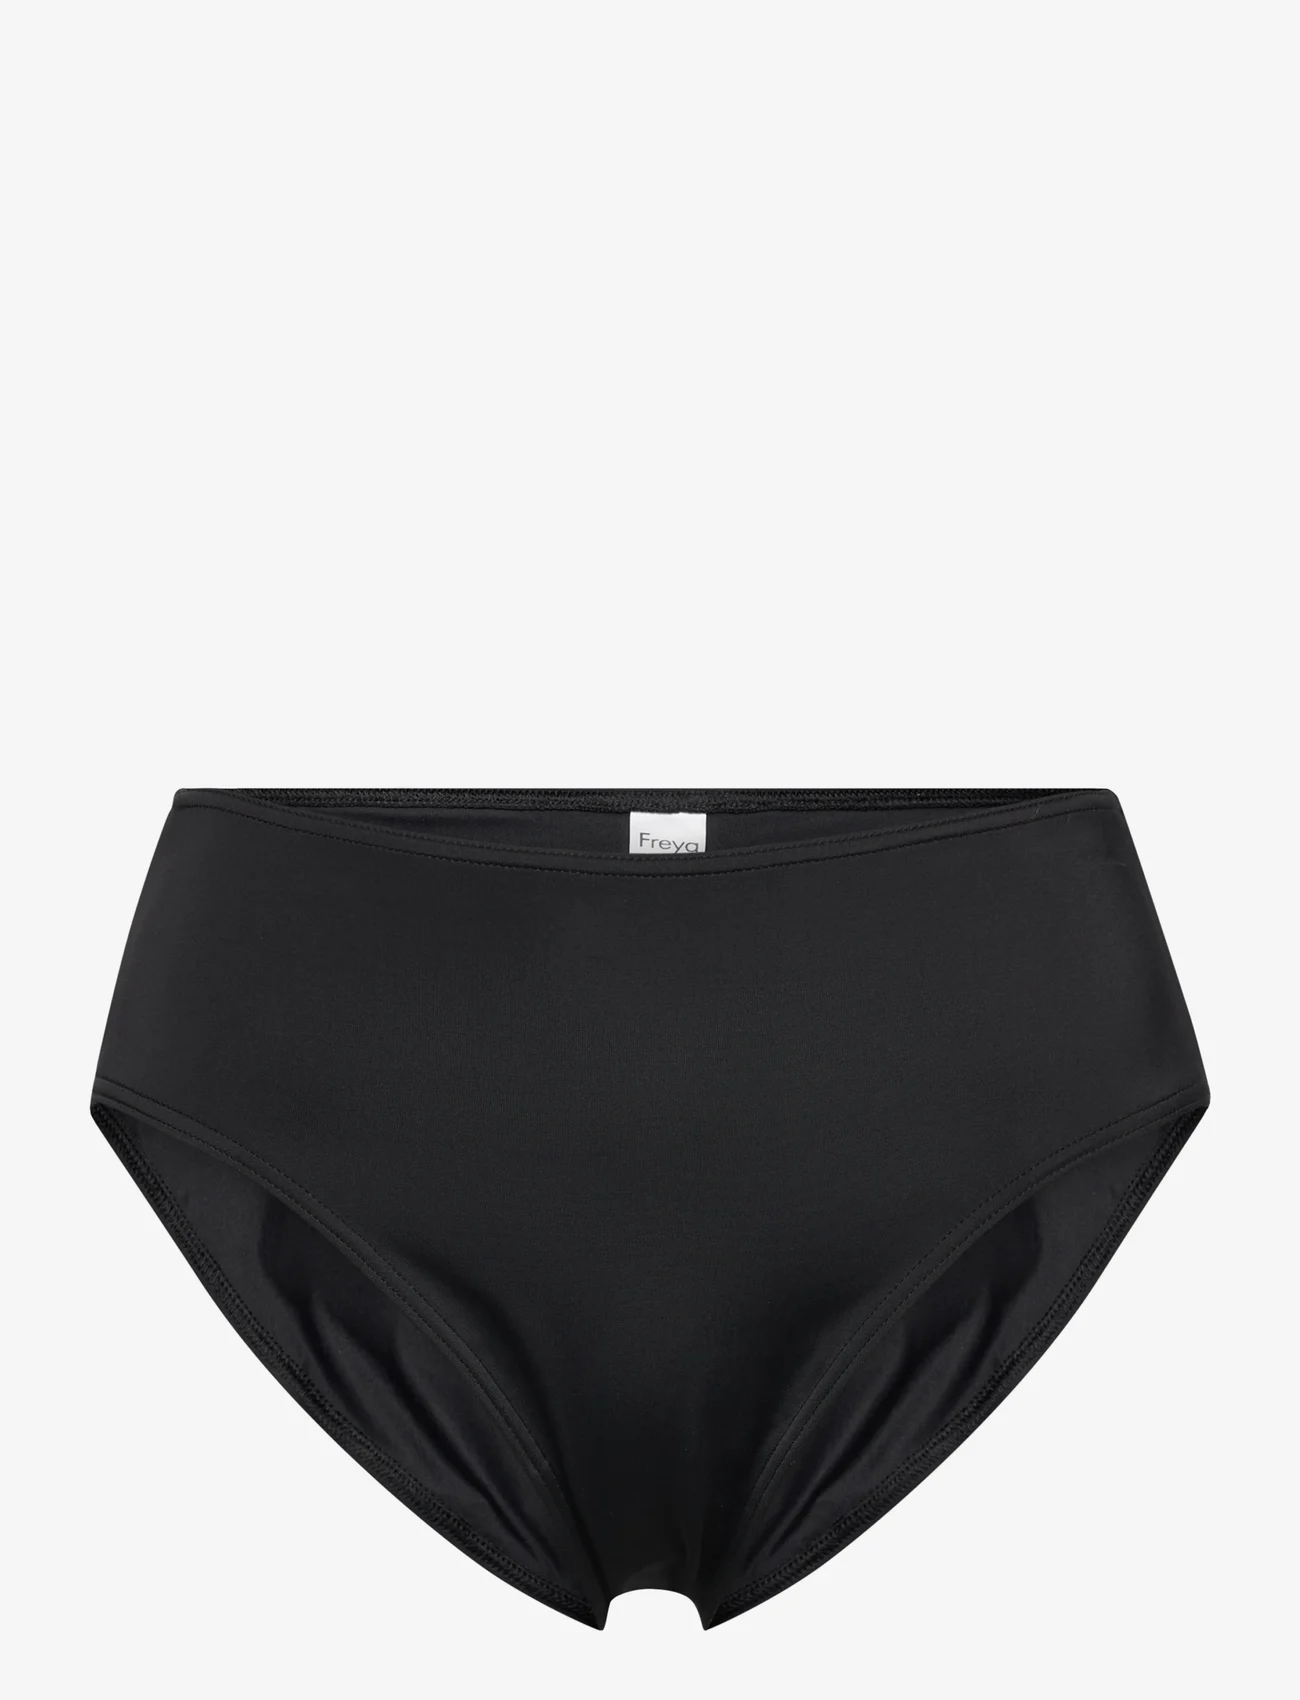 Freya - JEWEL COVE - high waist bikini bottoms - plain black - 0